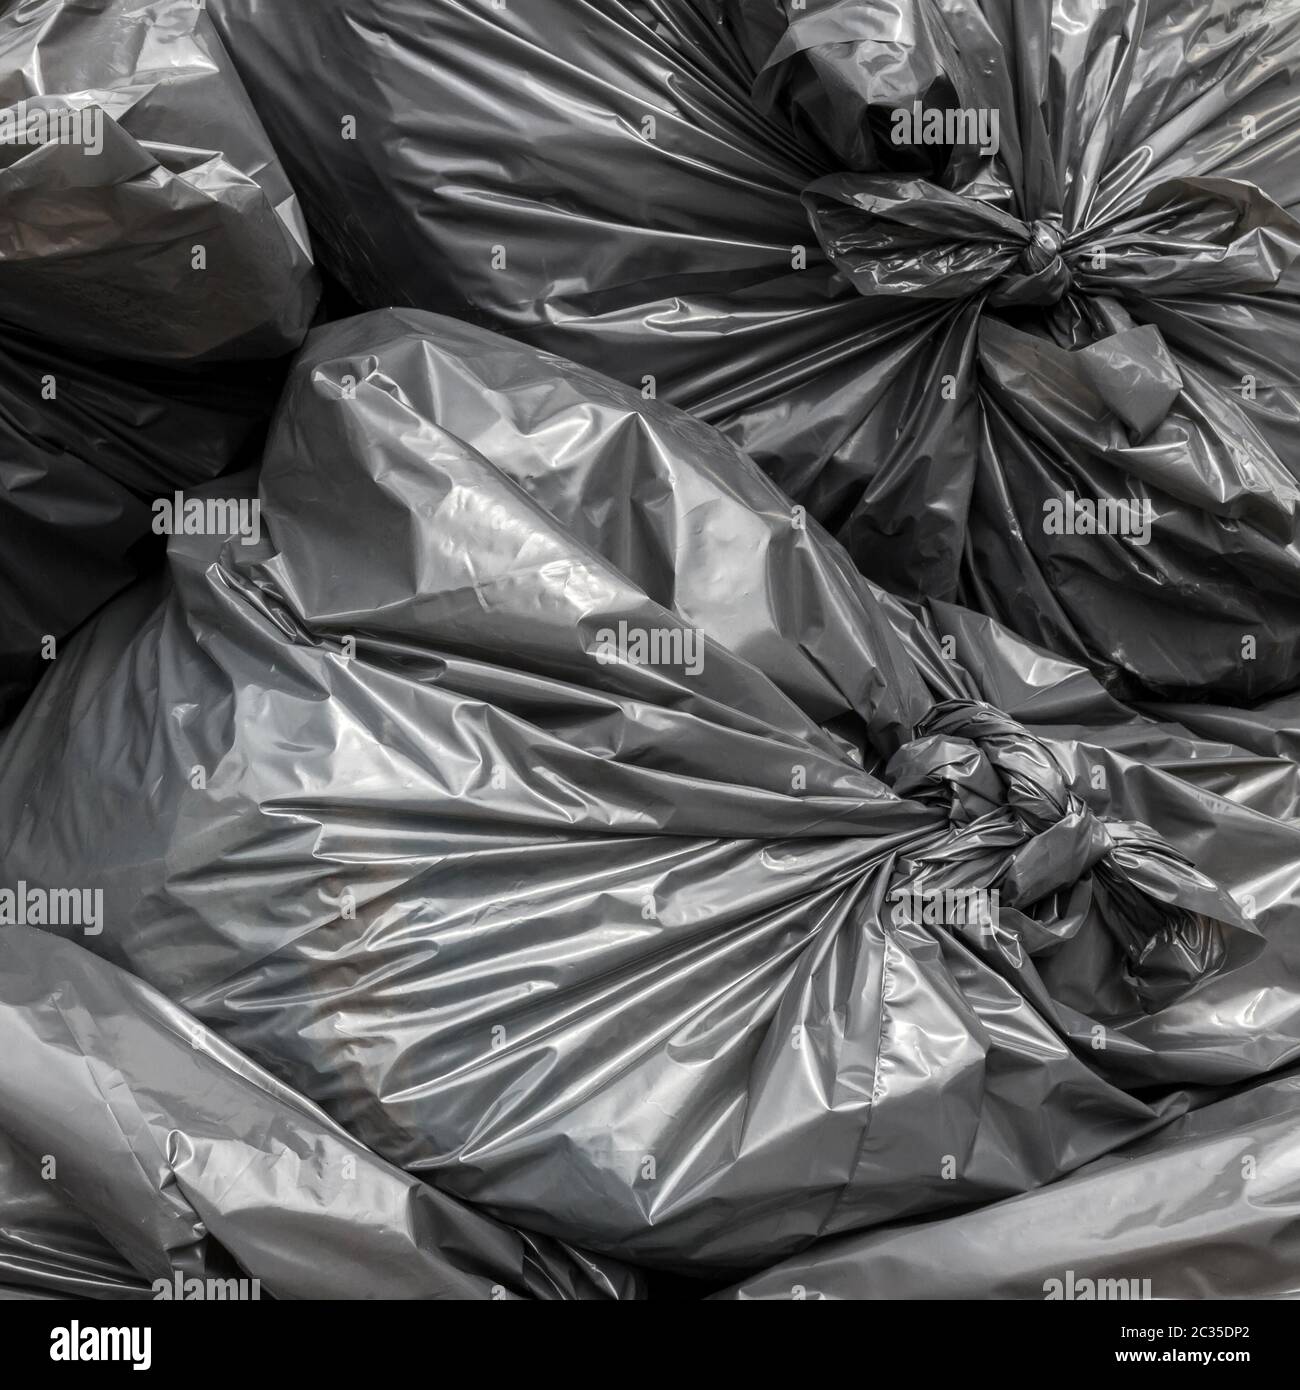 Black rubbish bags Stock Photo - Alamy